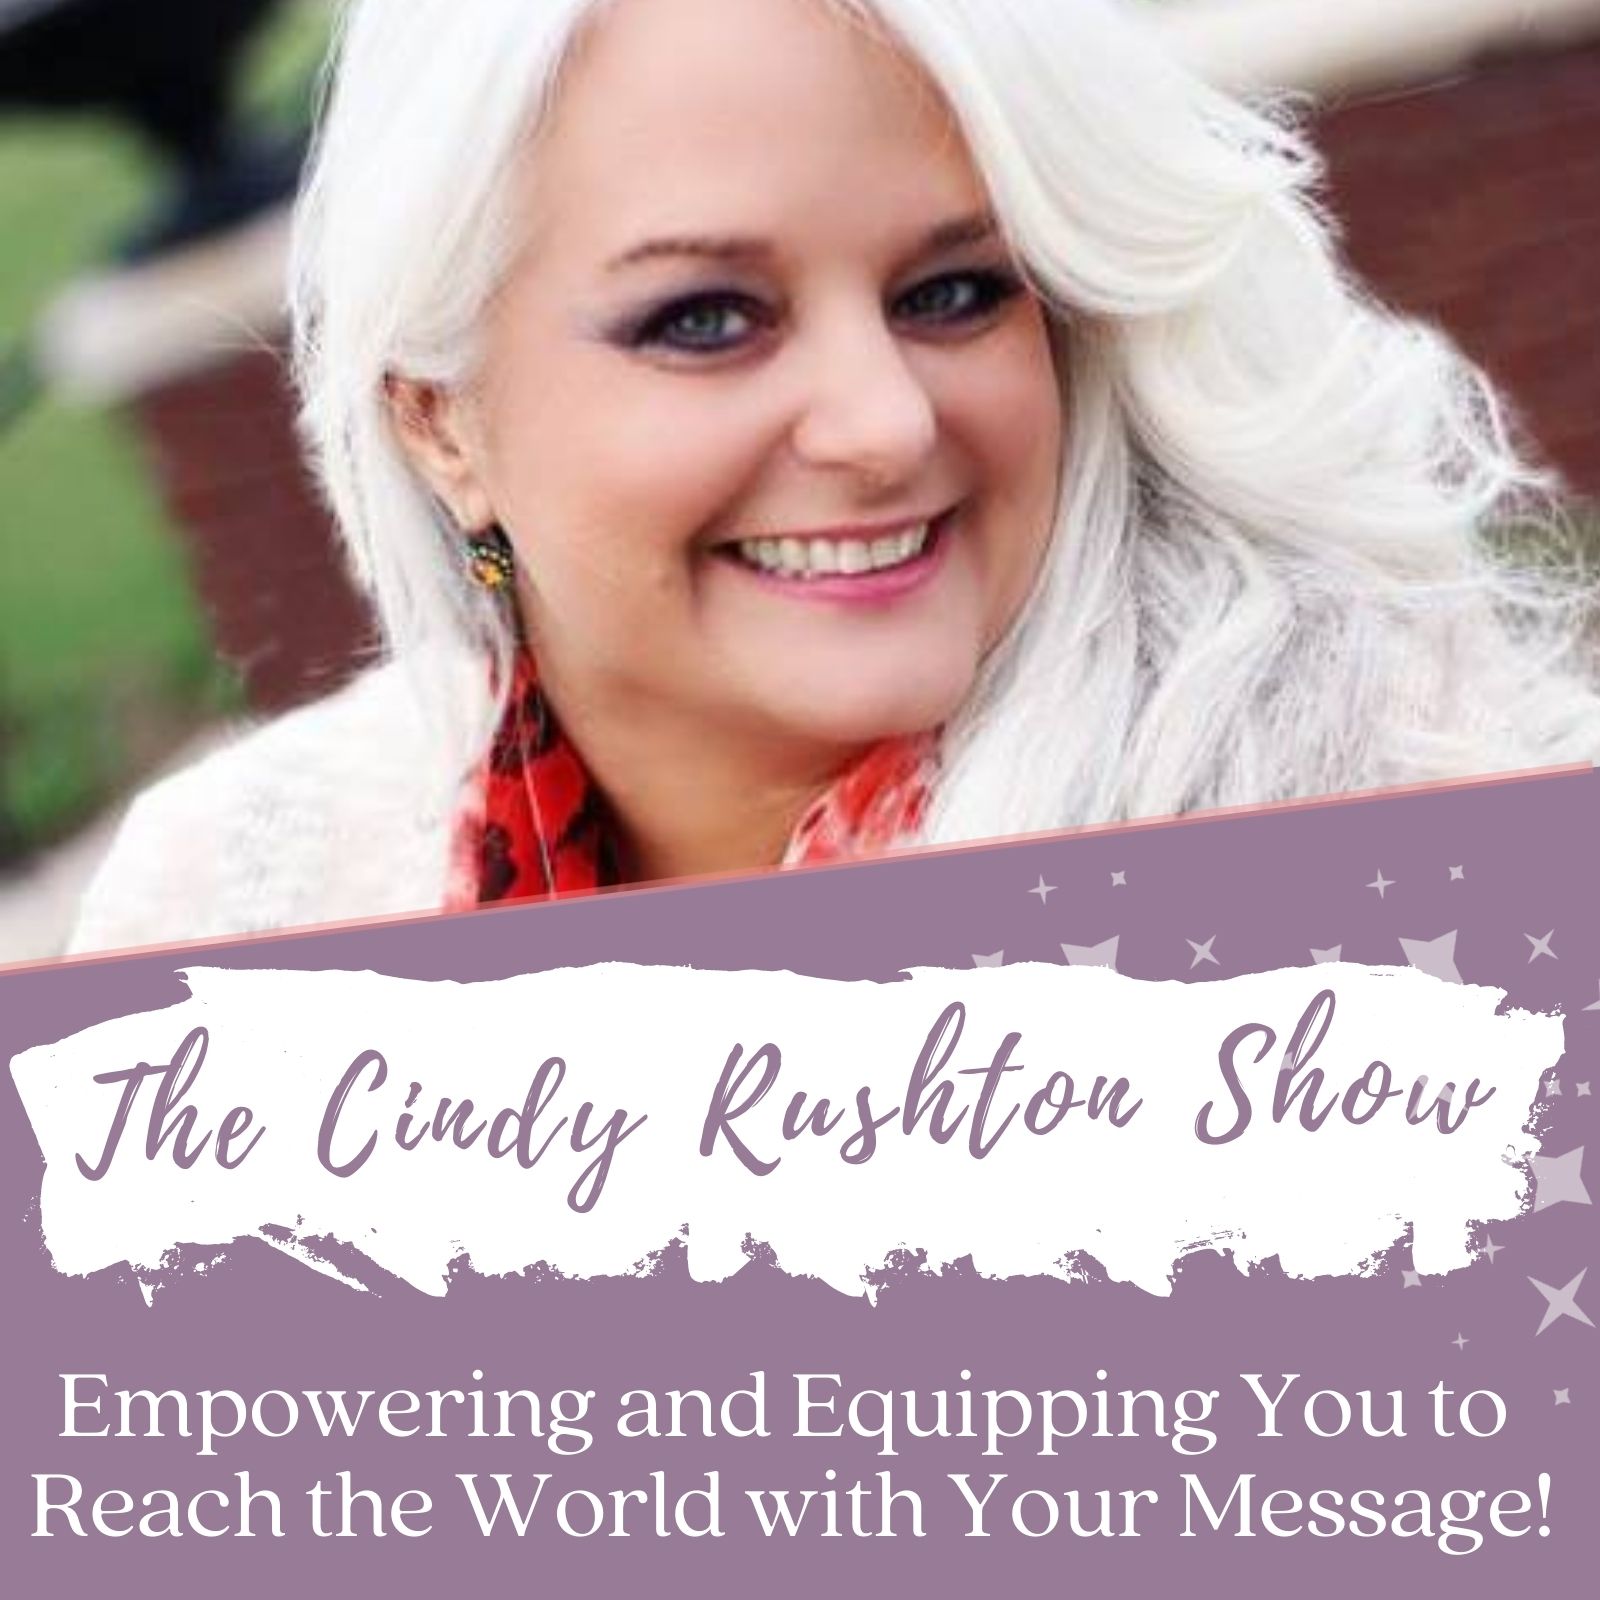 The Cindy Rushton Show